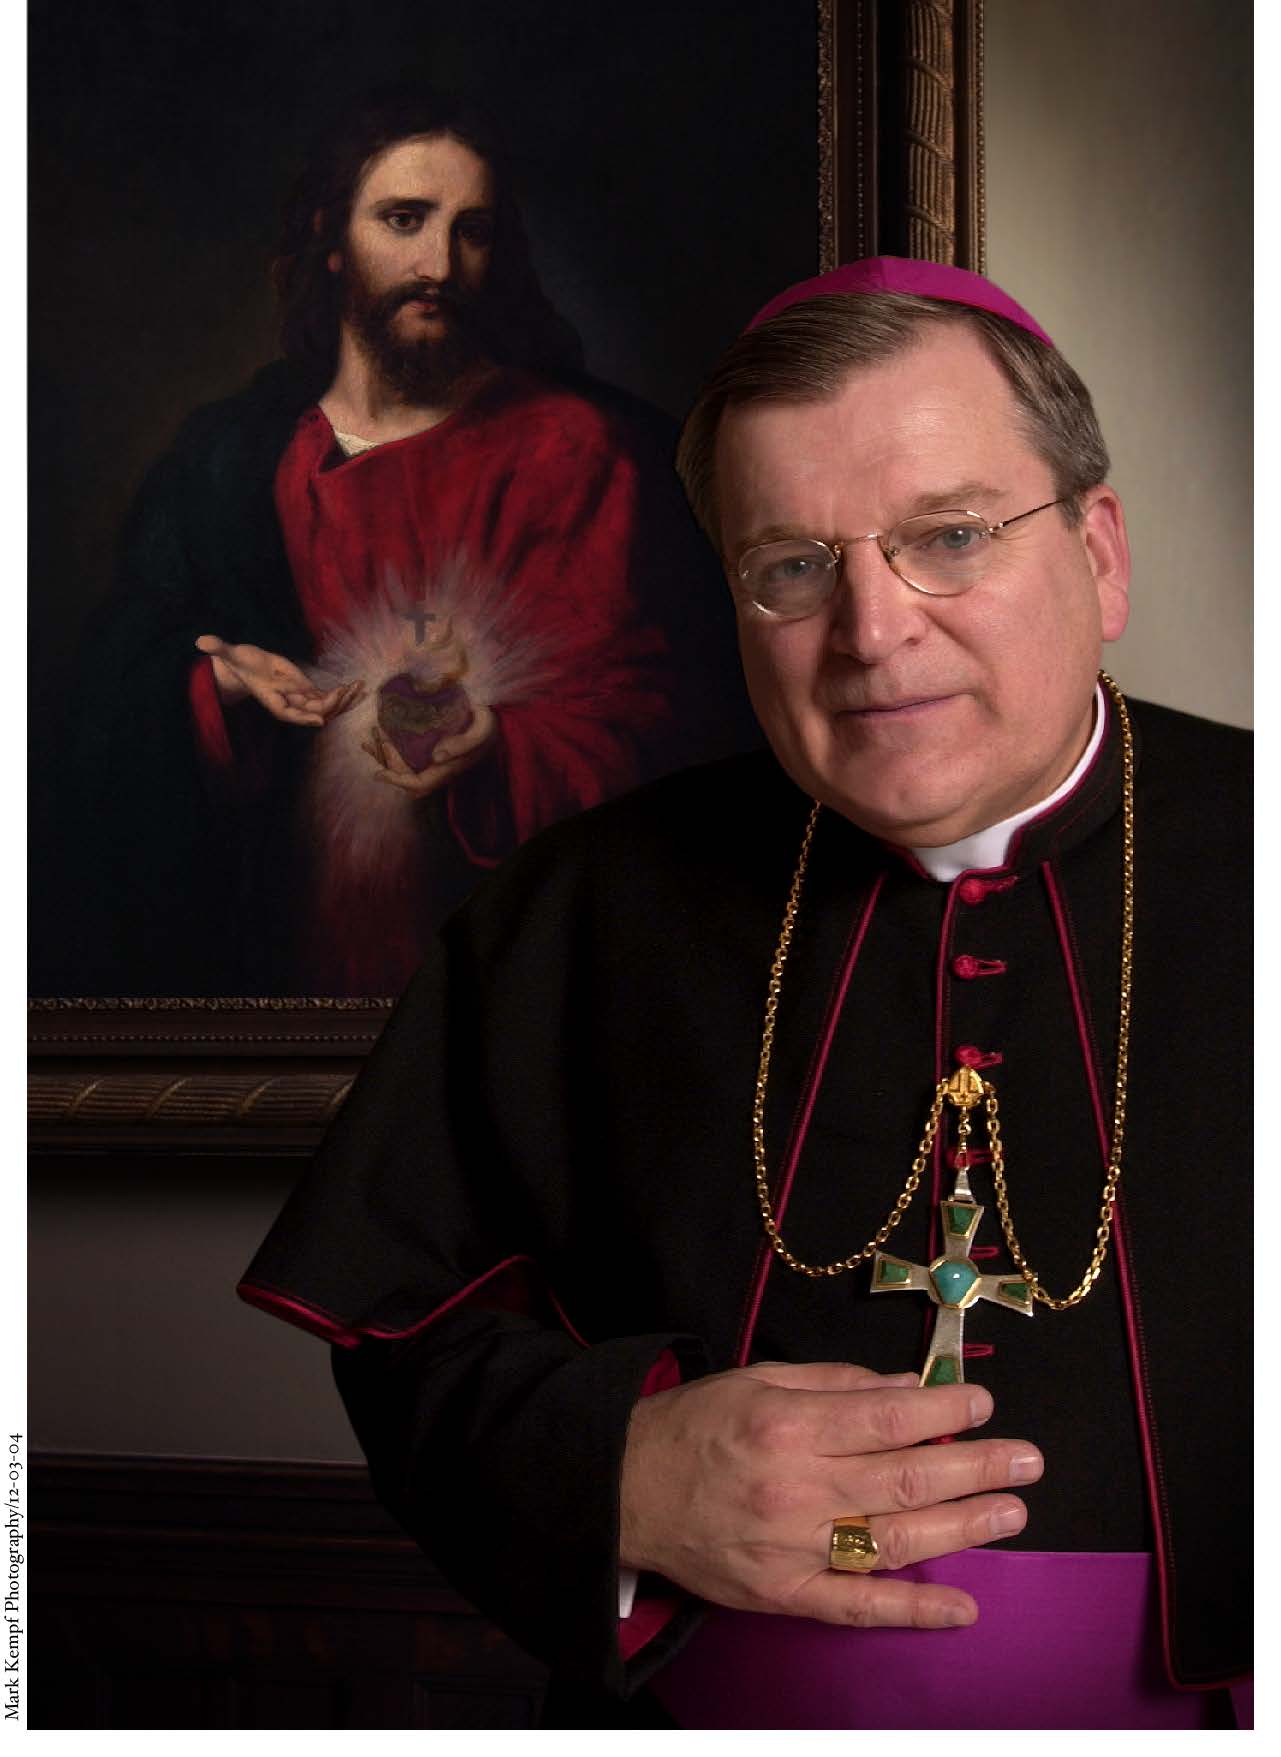 Executive - Archbishop and Bishop - Photographic Material - Raymond Cardinal Burke - Photo portrait of Cardinal Burke, circa 2003